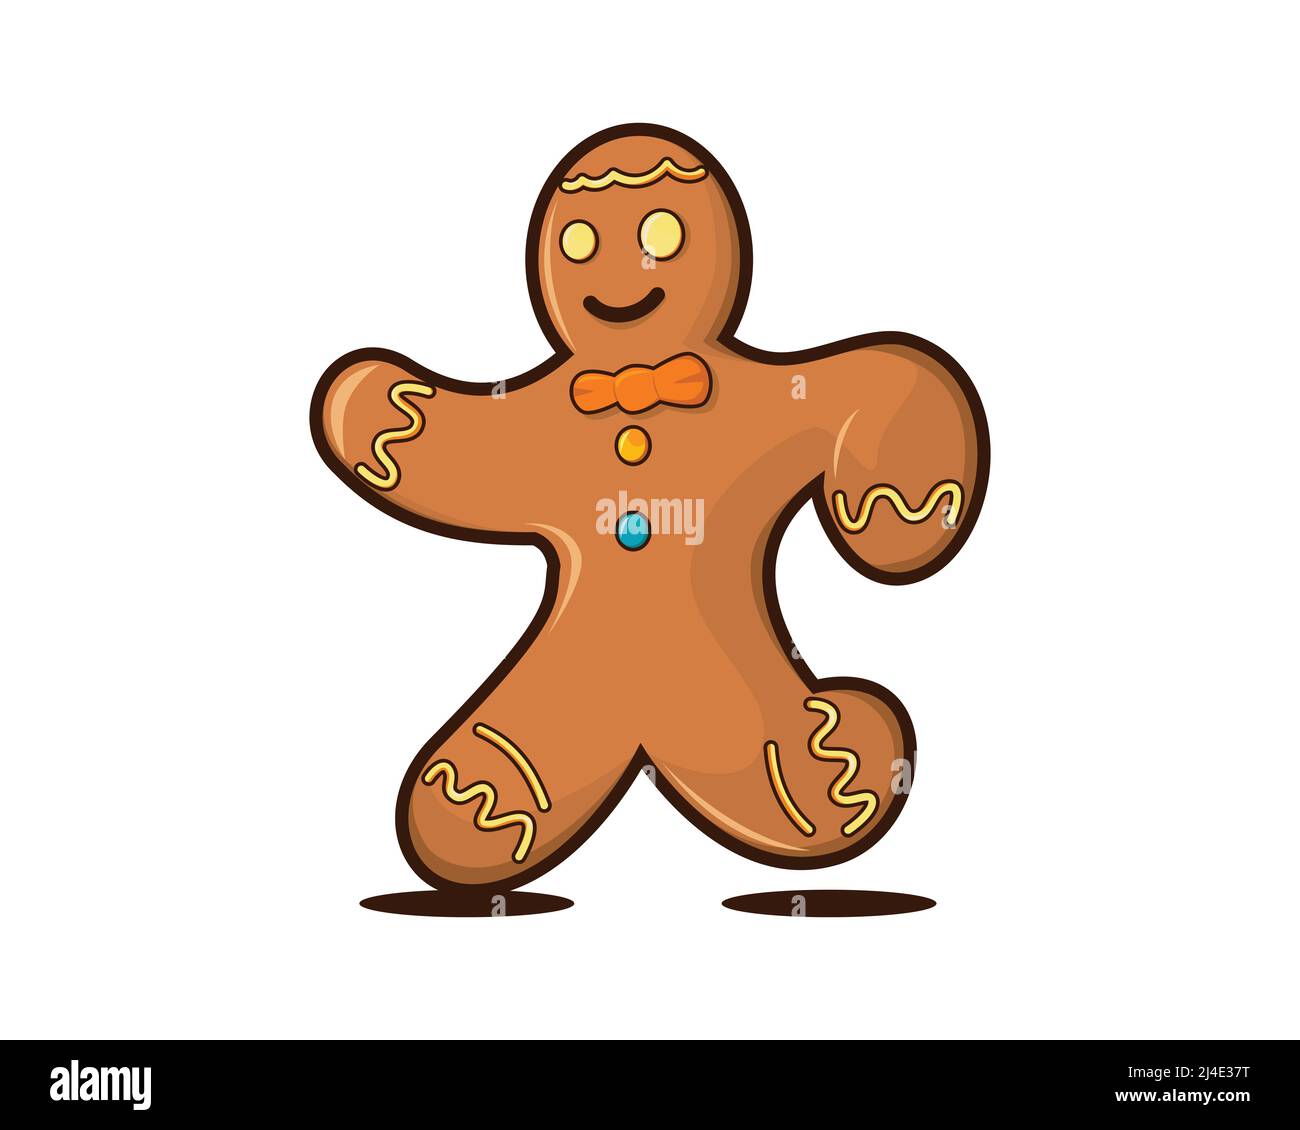 Gingerbread Man with Having Fun Gesture Illustration Vector Stock Vector